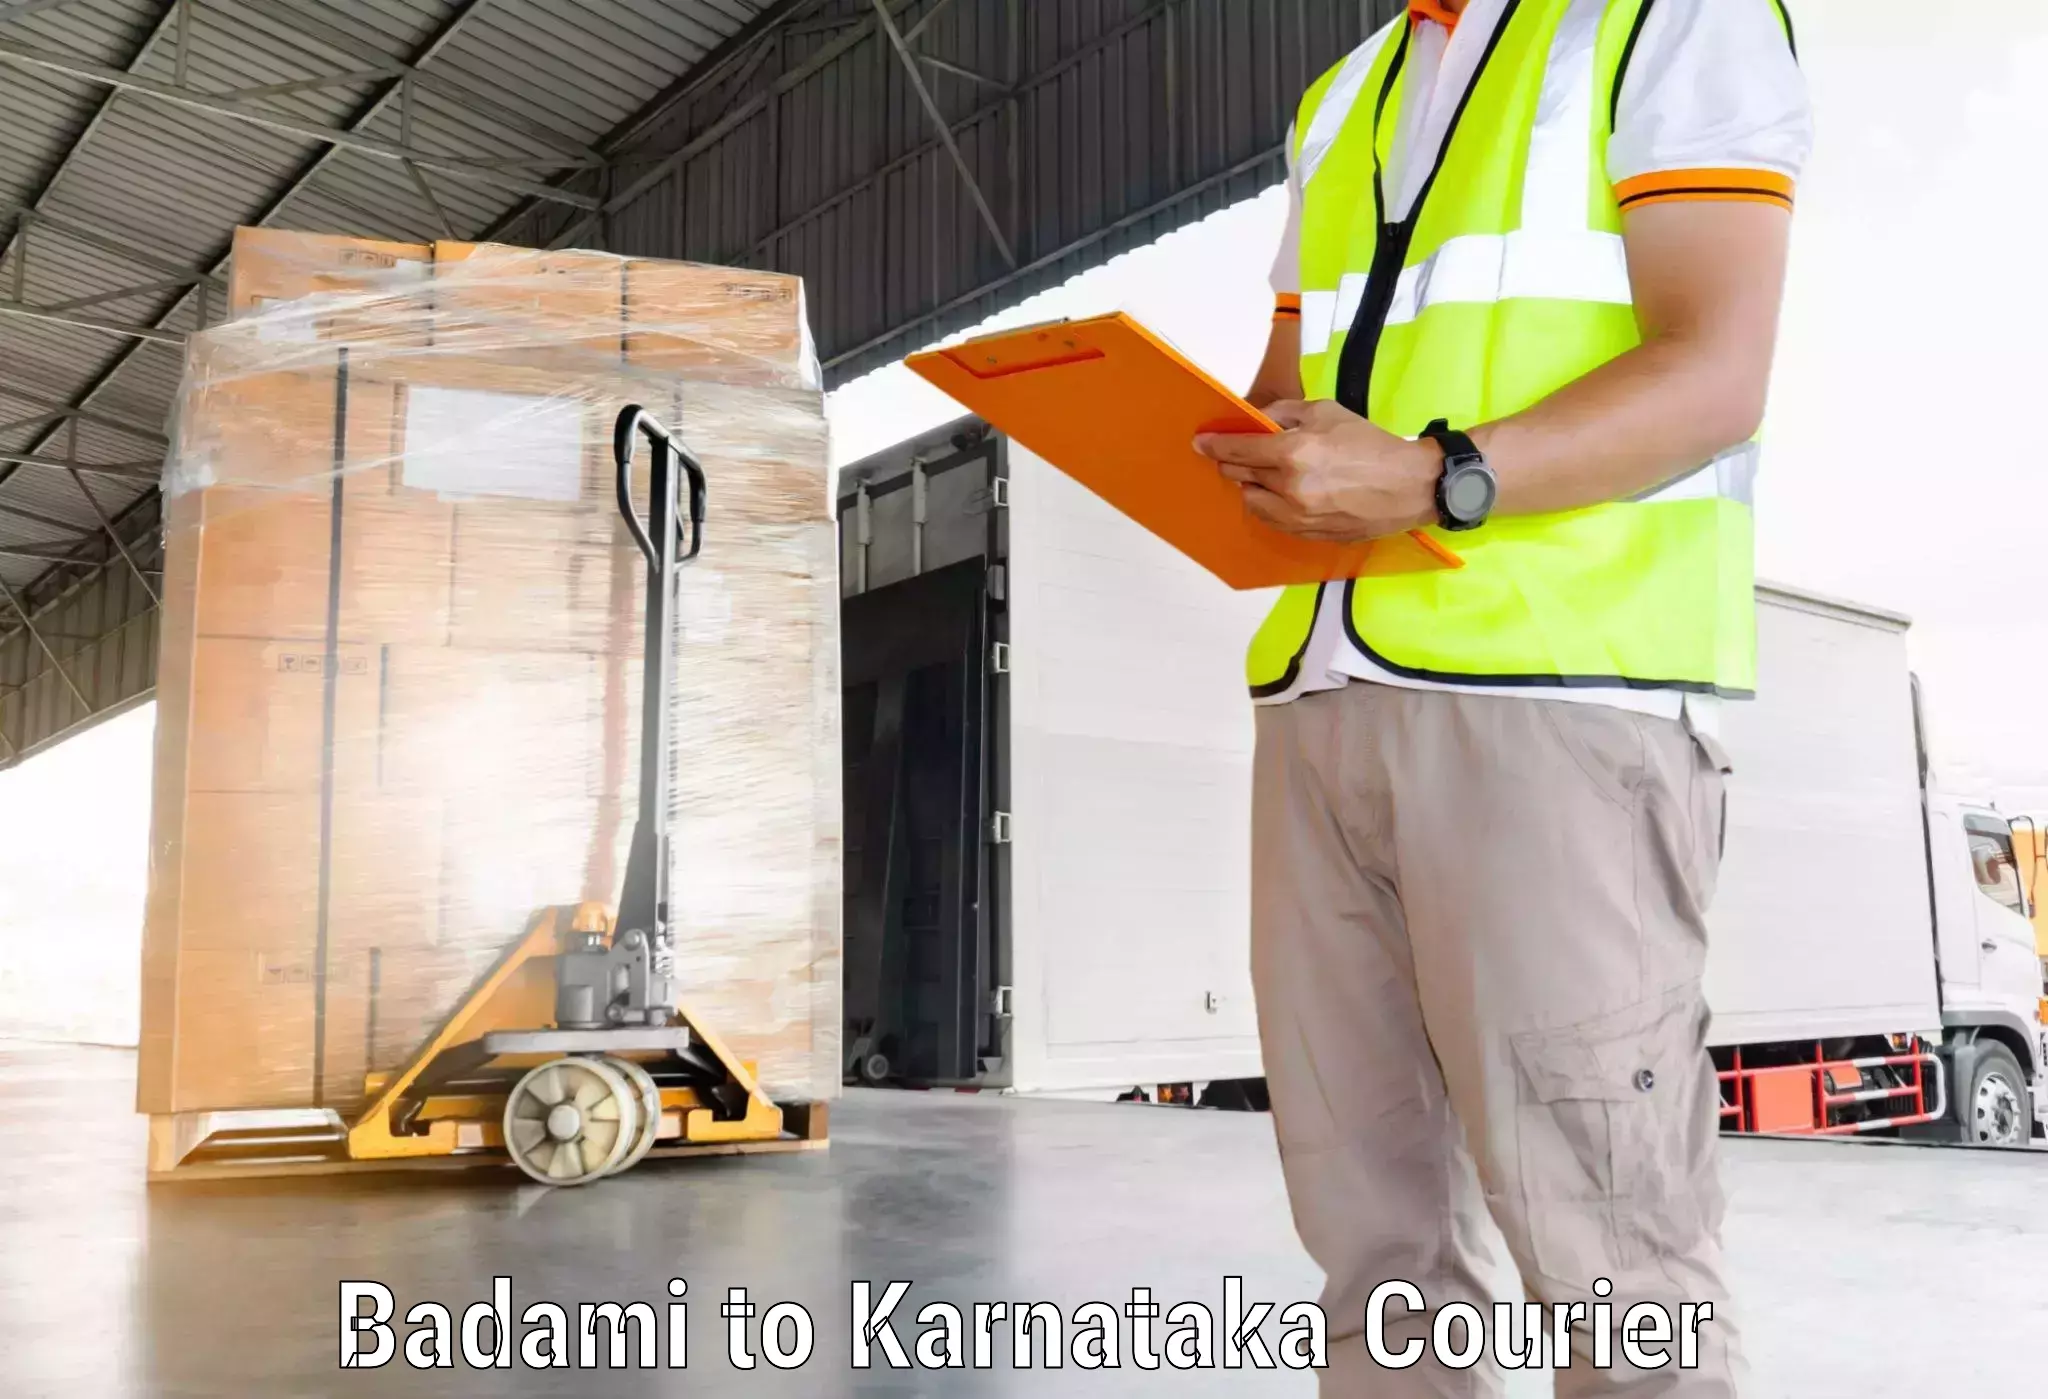 Online package tracking Badami to Shorapur